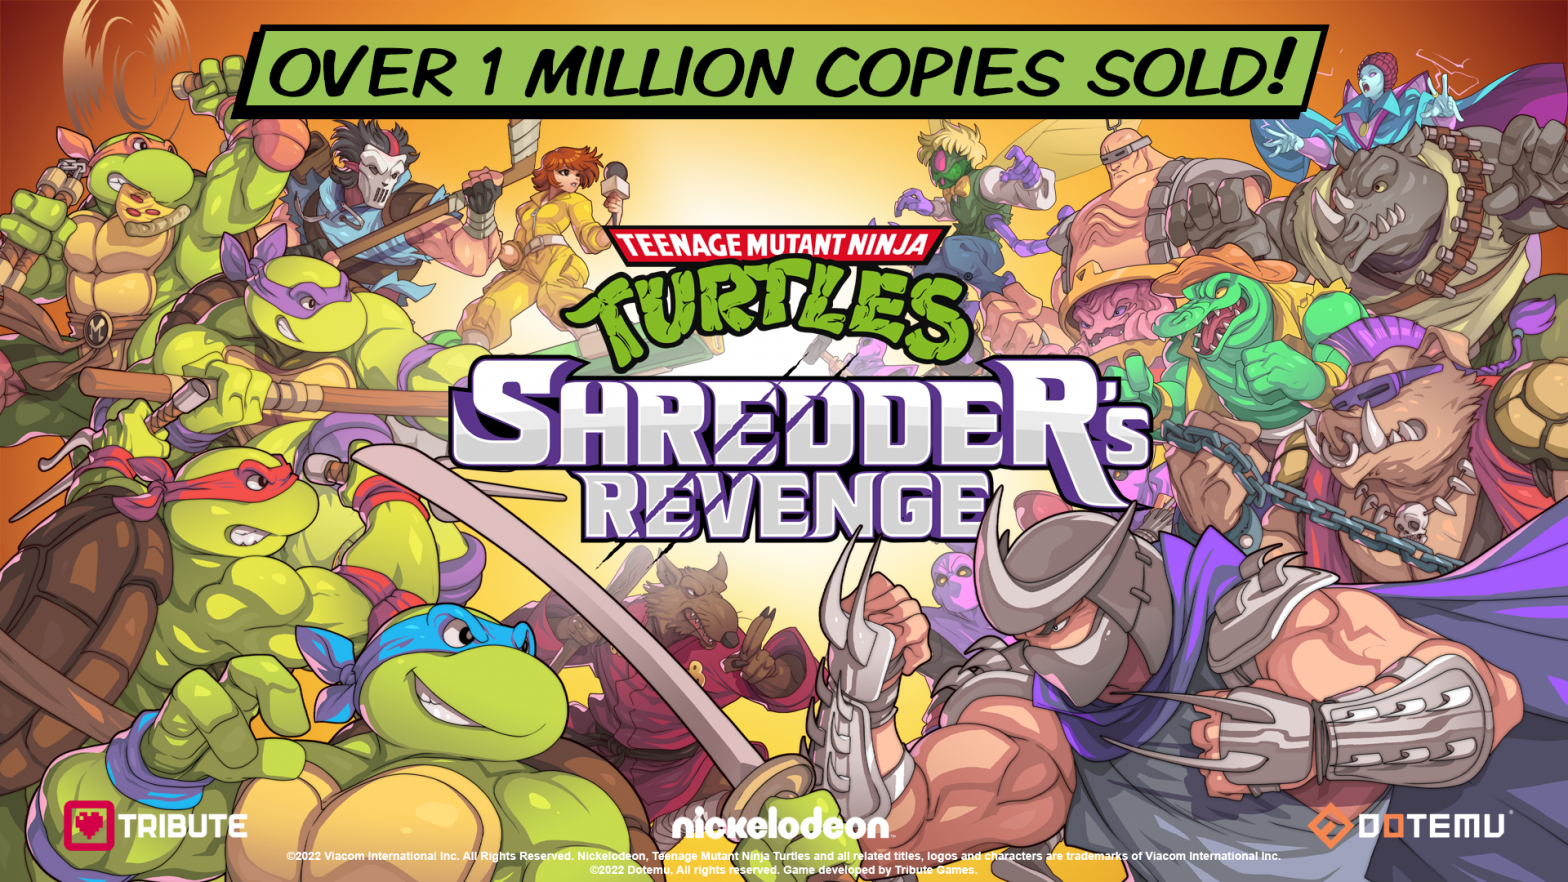 TMNT: Shredder’s Revenge Combos More Than a Million Copies Sold